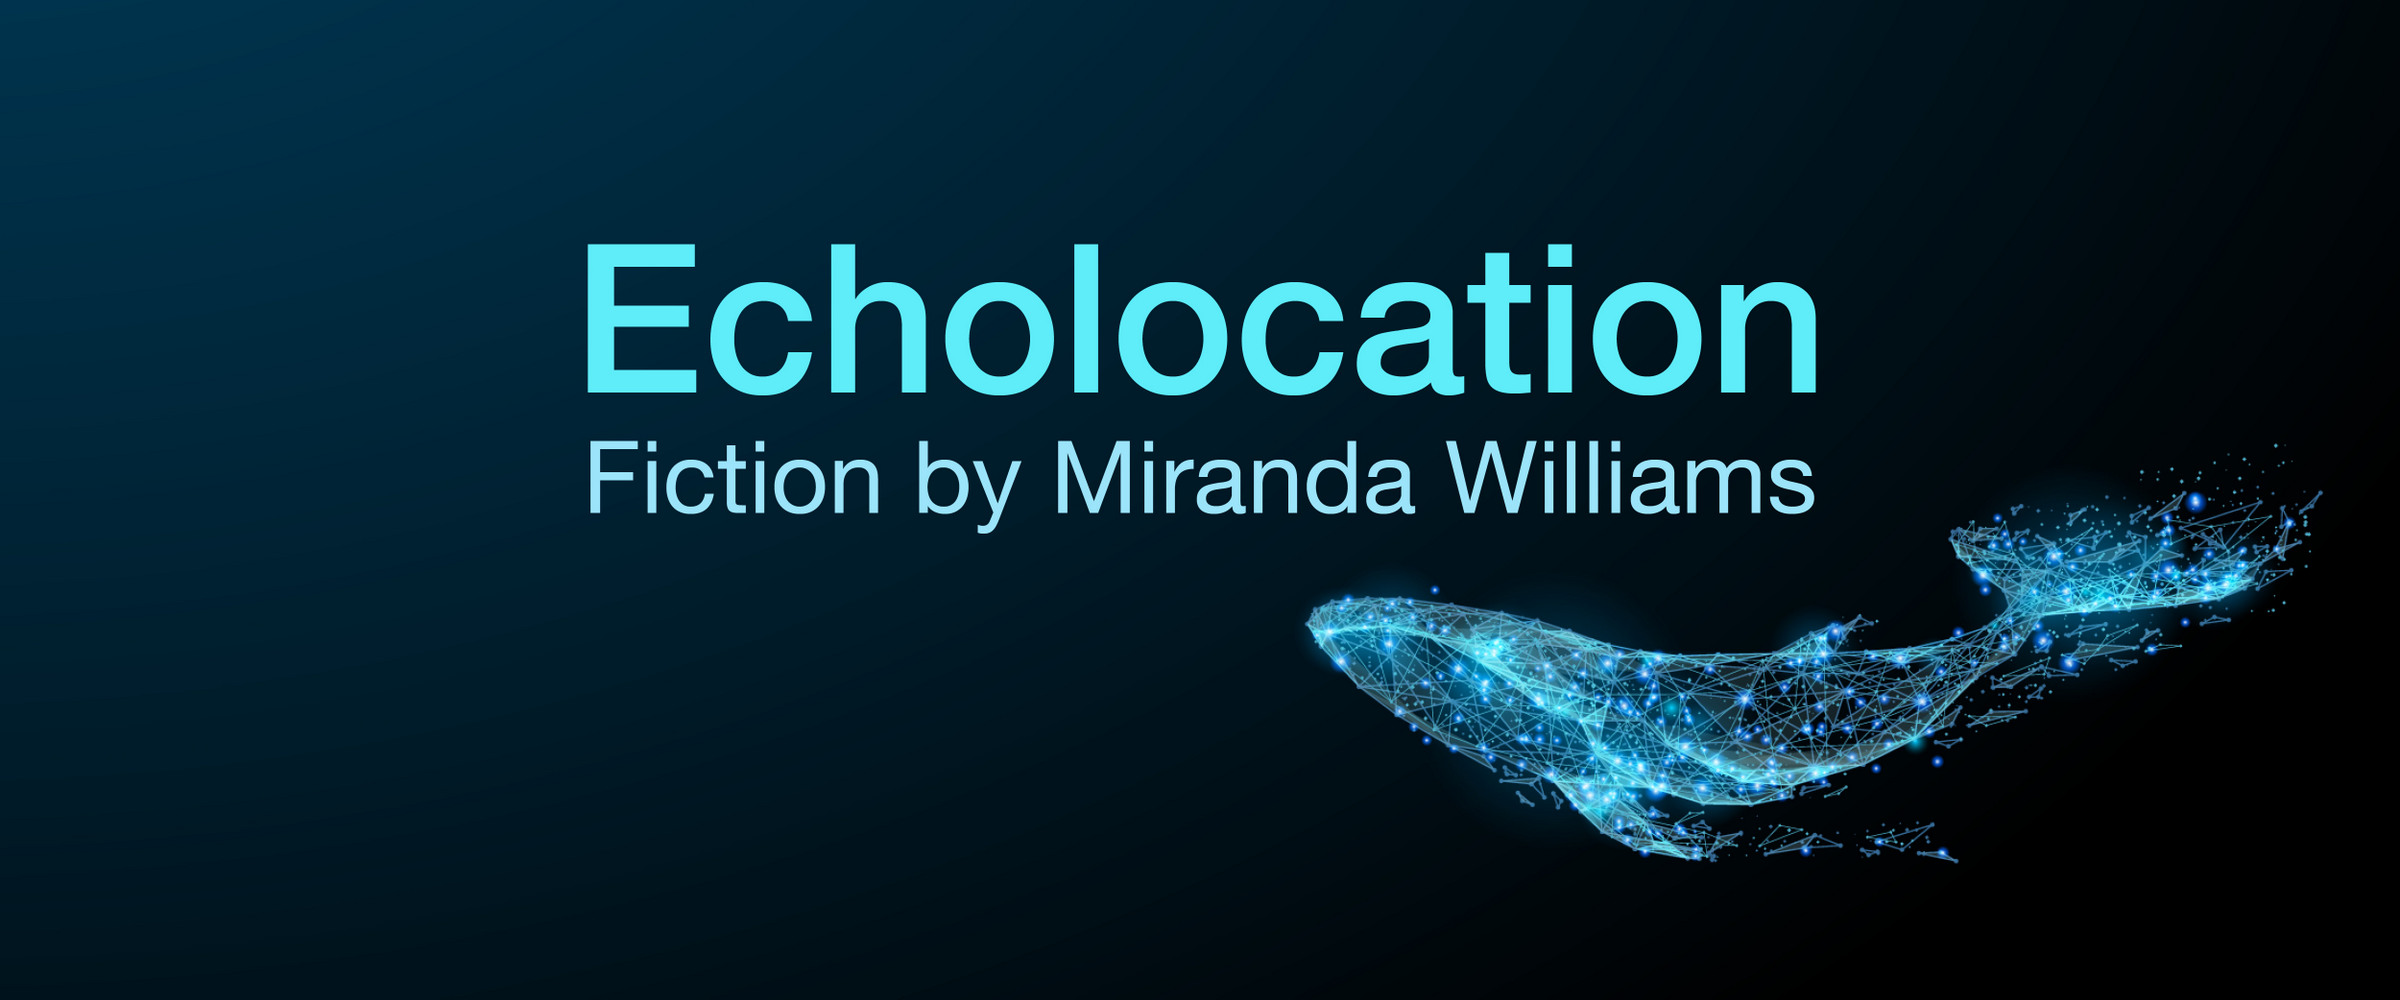 Text: Echolocation, fiction by Miranda Williams